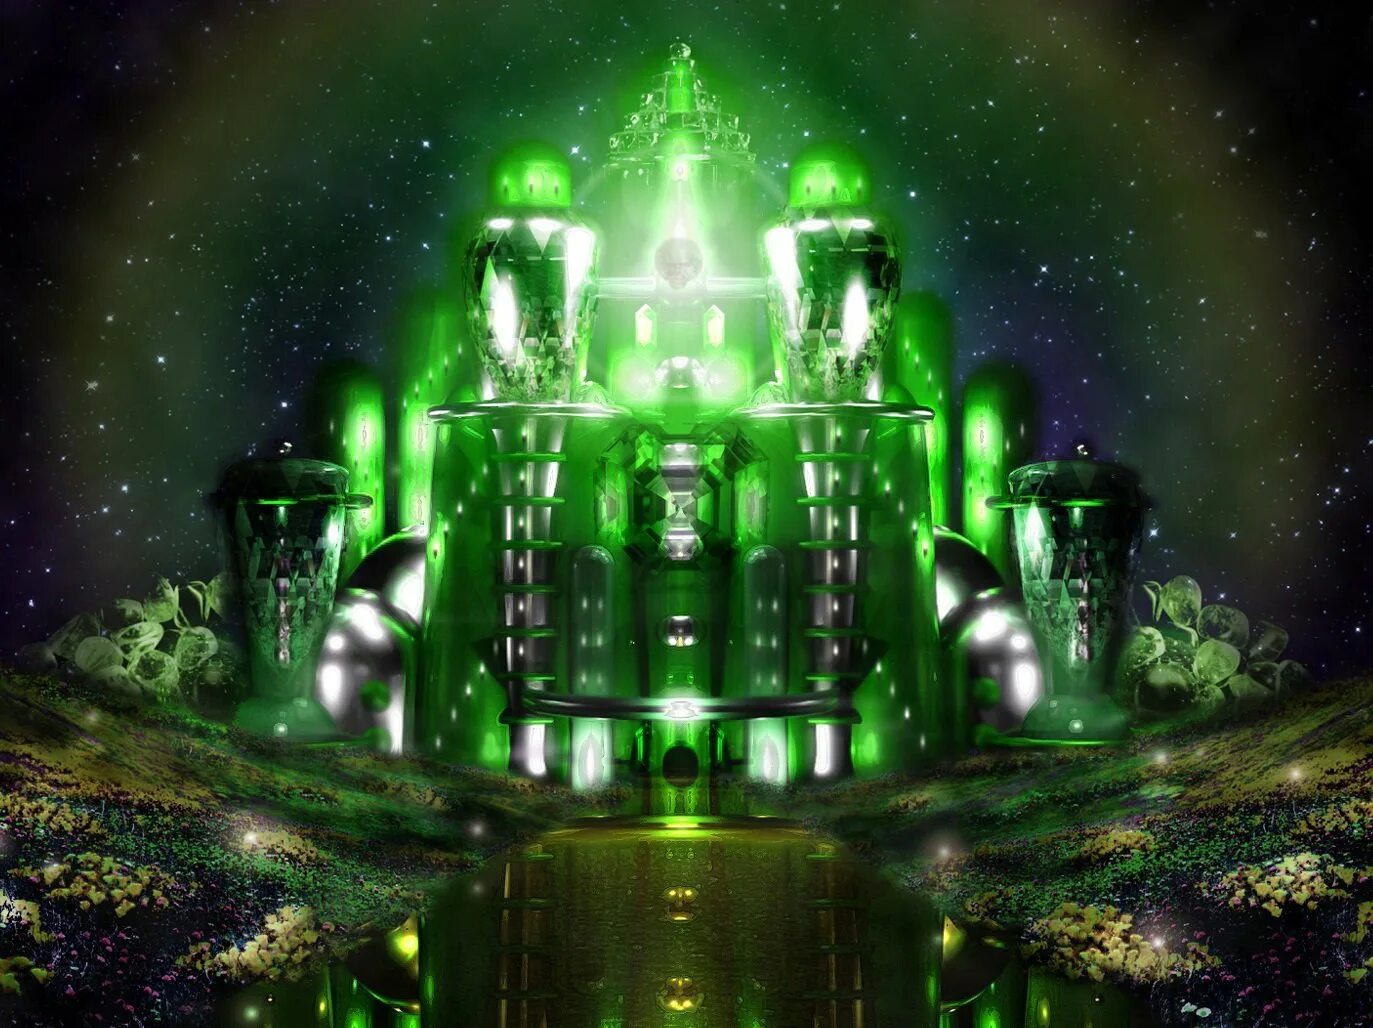 Emerald city. Изумрудный город дворец Гудвина. Замок Гудвина волшебник изумрудного города. Тронный зал волшебника изумрудного города. Волшебник изумрудного грода.